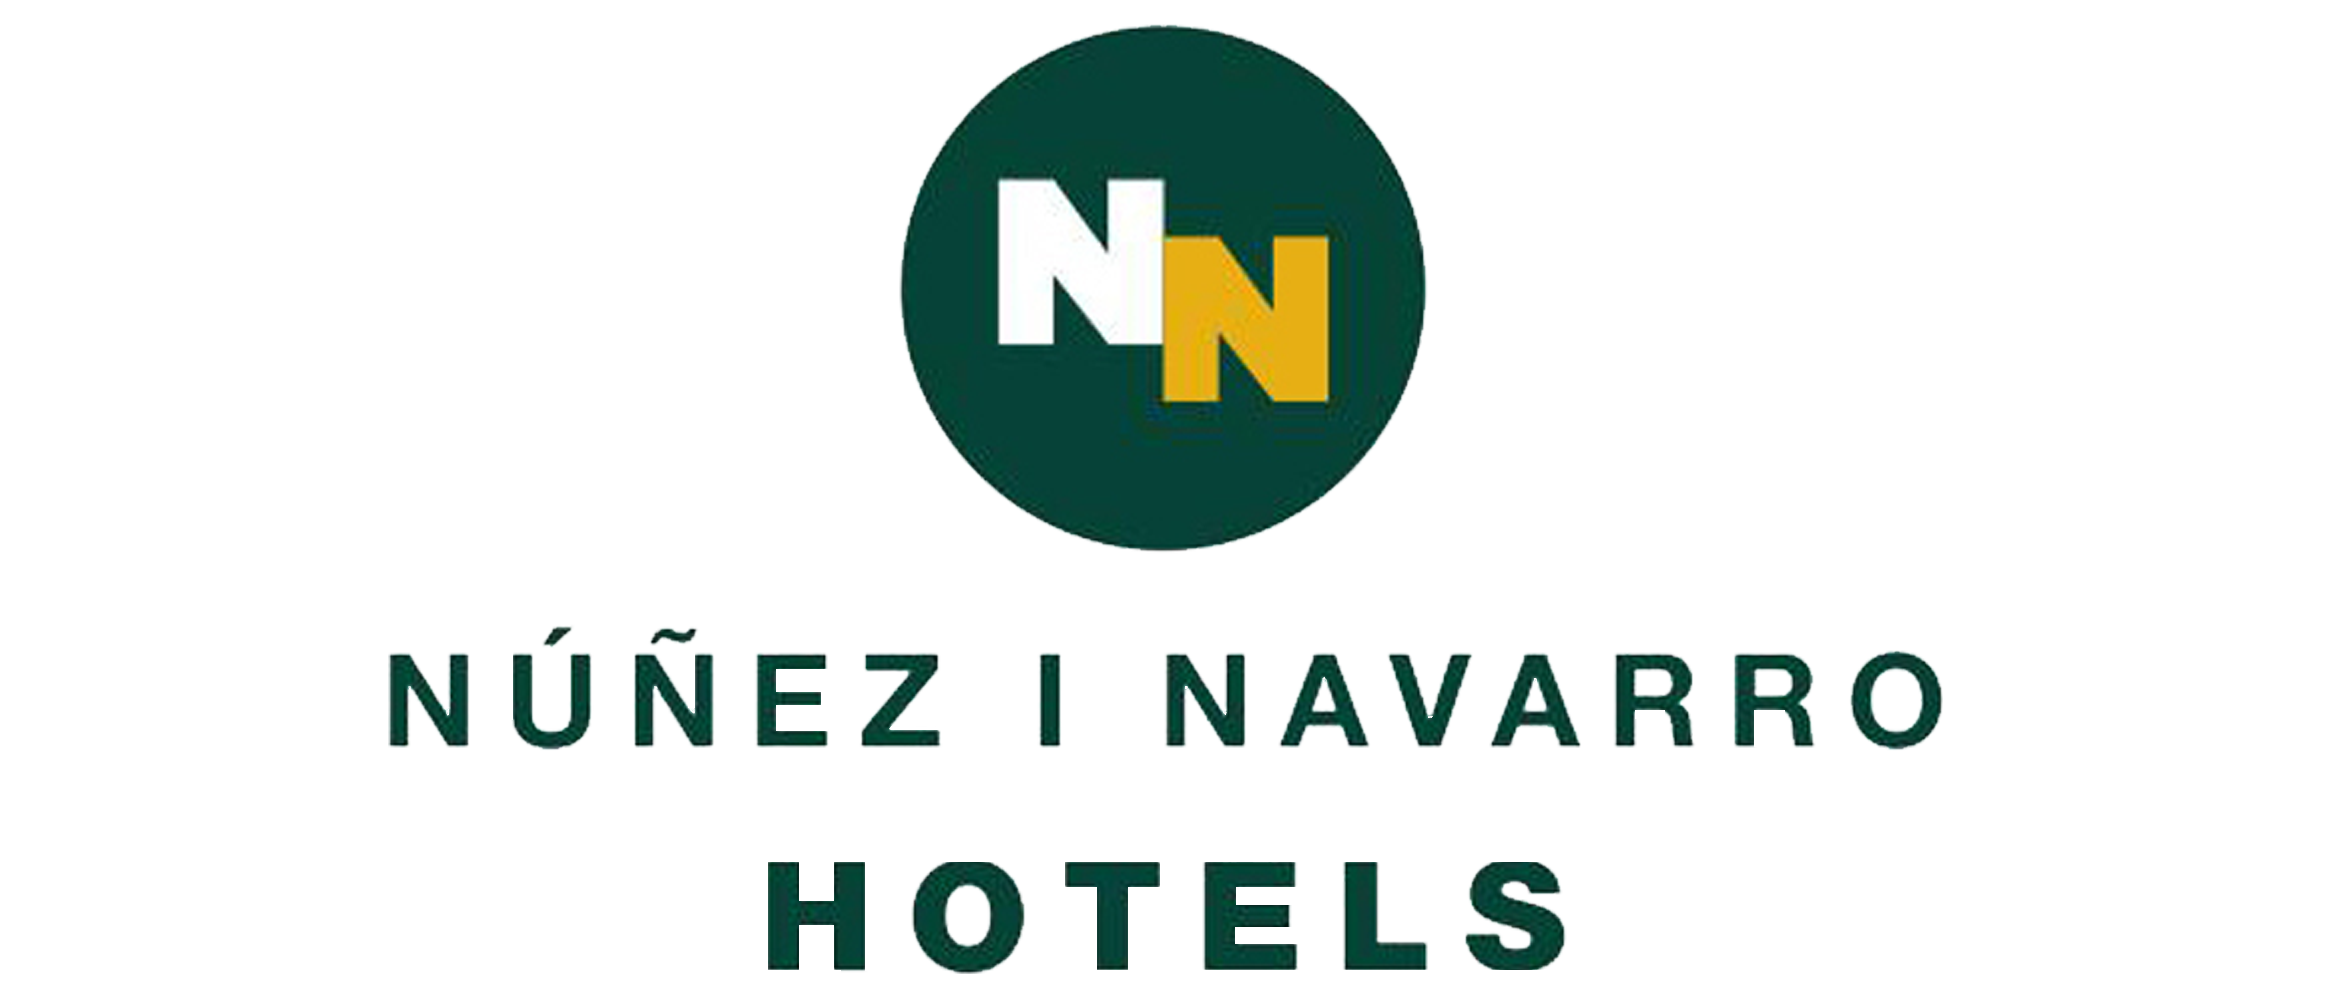 Cupón promocional NN Hotels